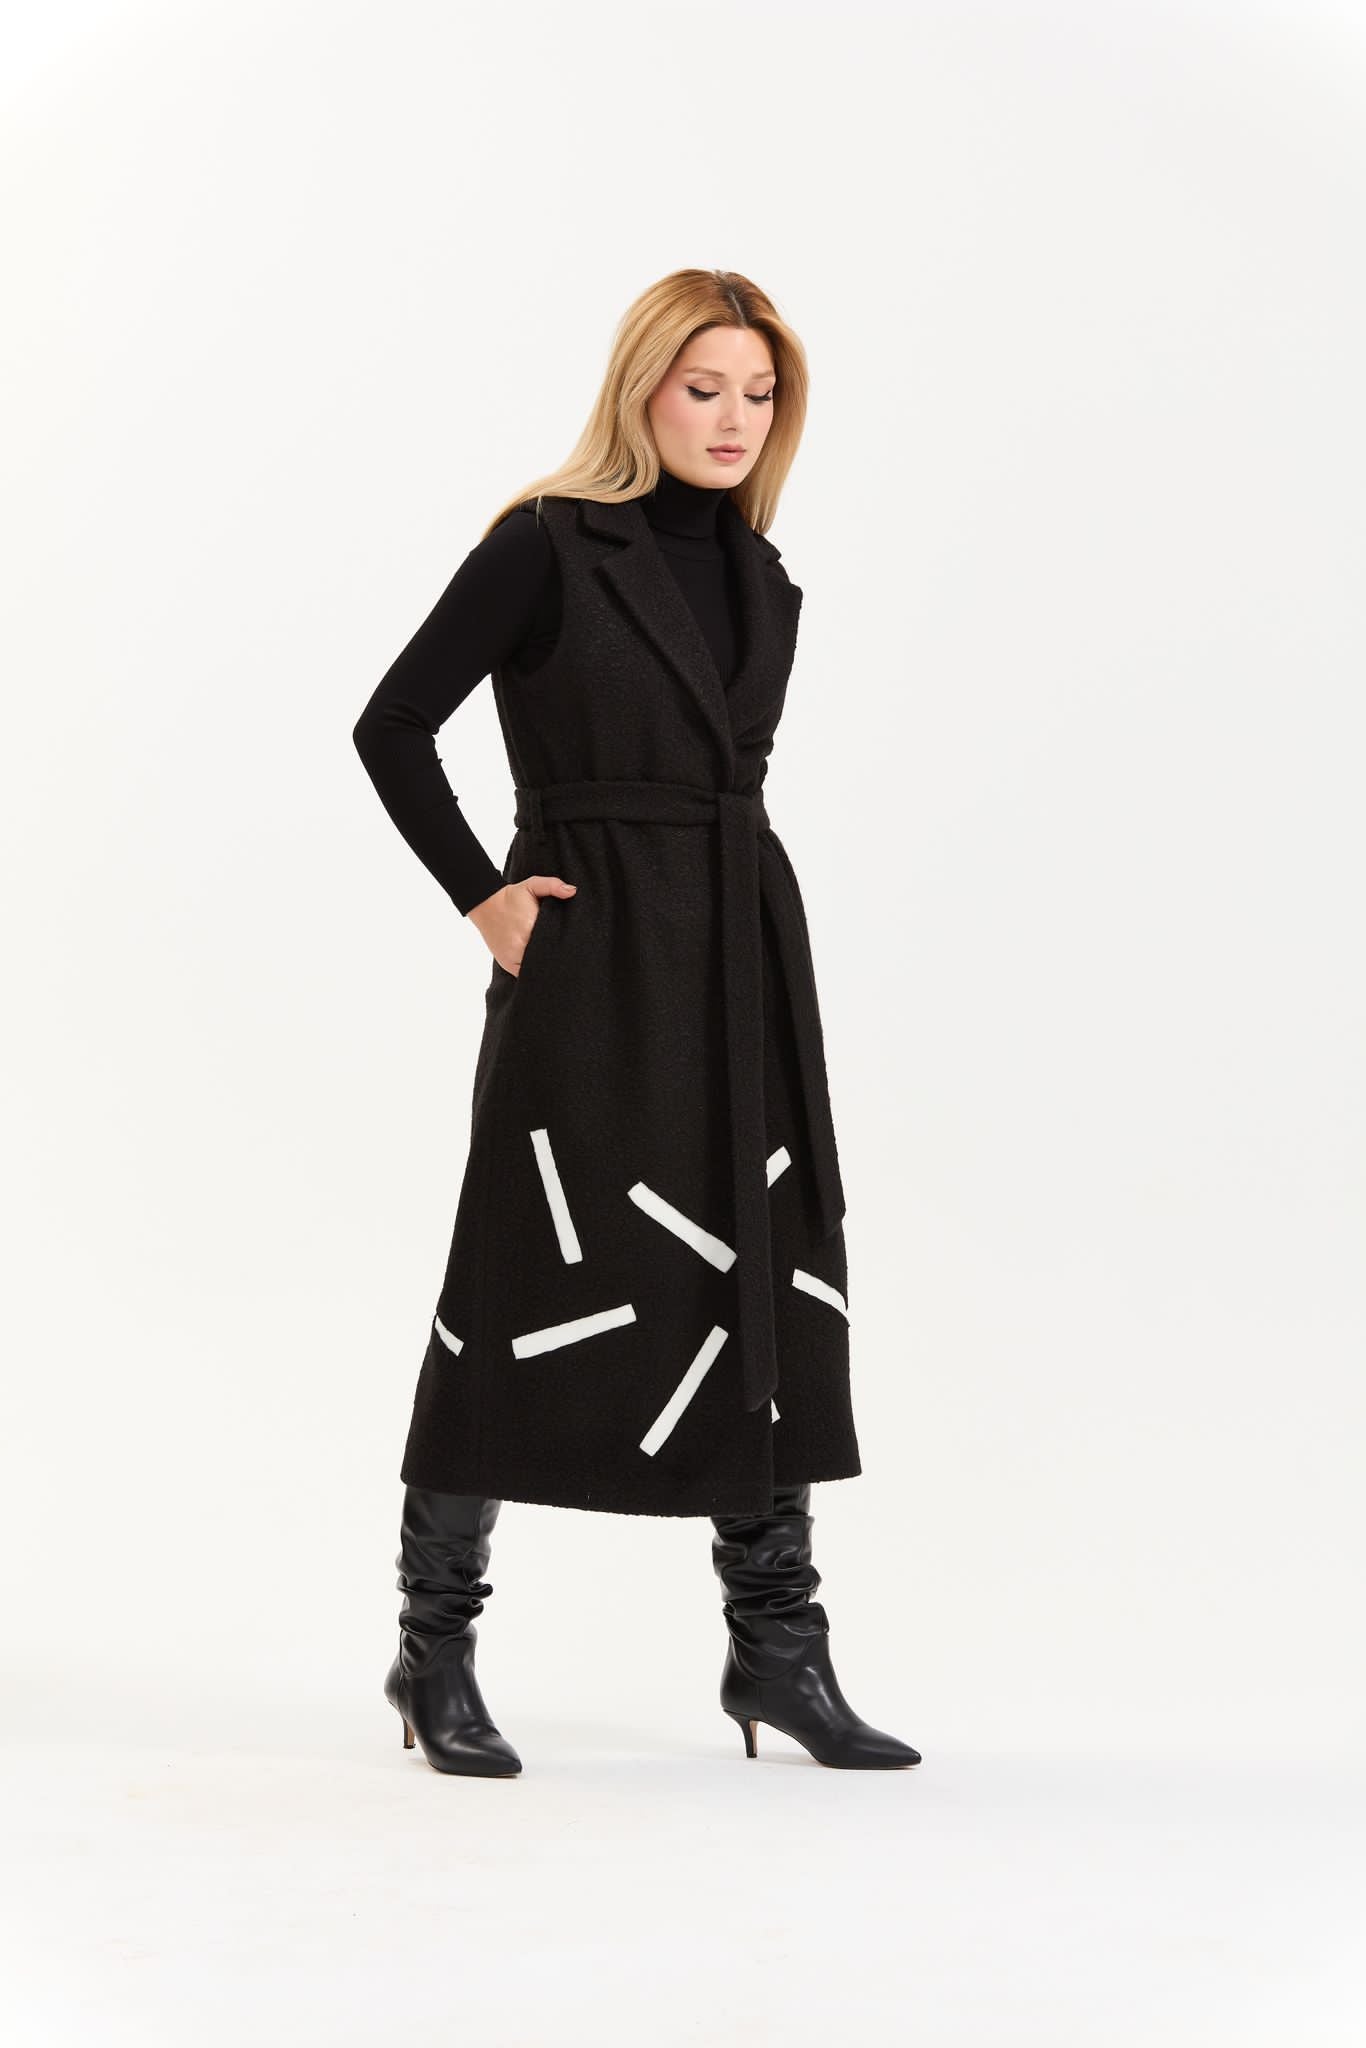 Designer Sleeveless Jacket Cardigan Wool Design B-11 - Black